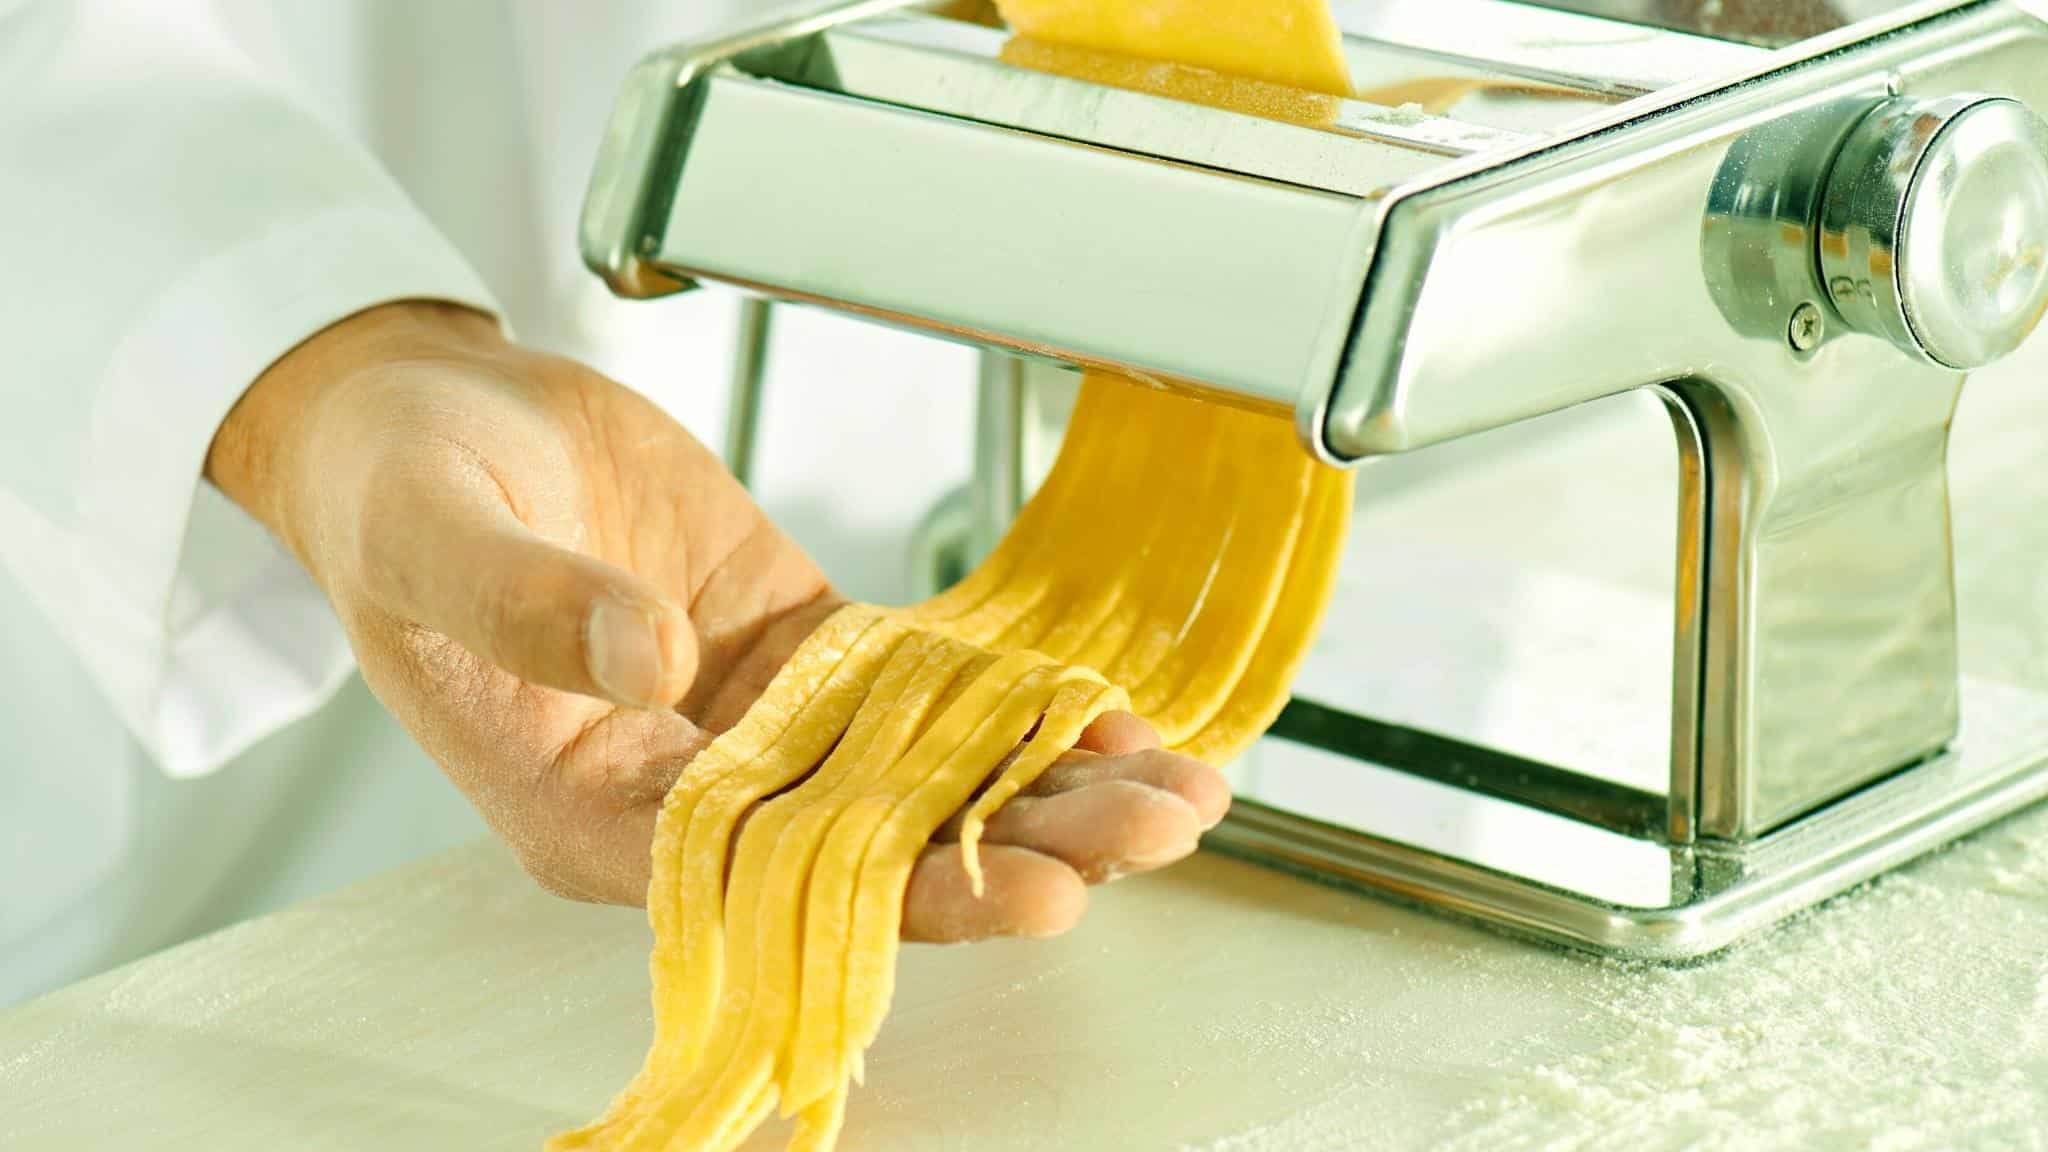 Best pasta makers